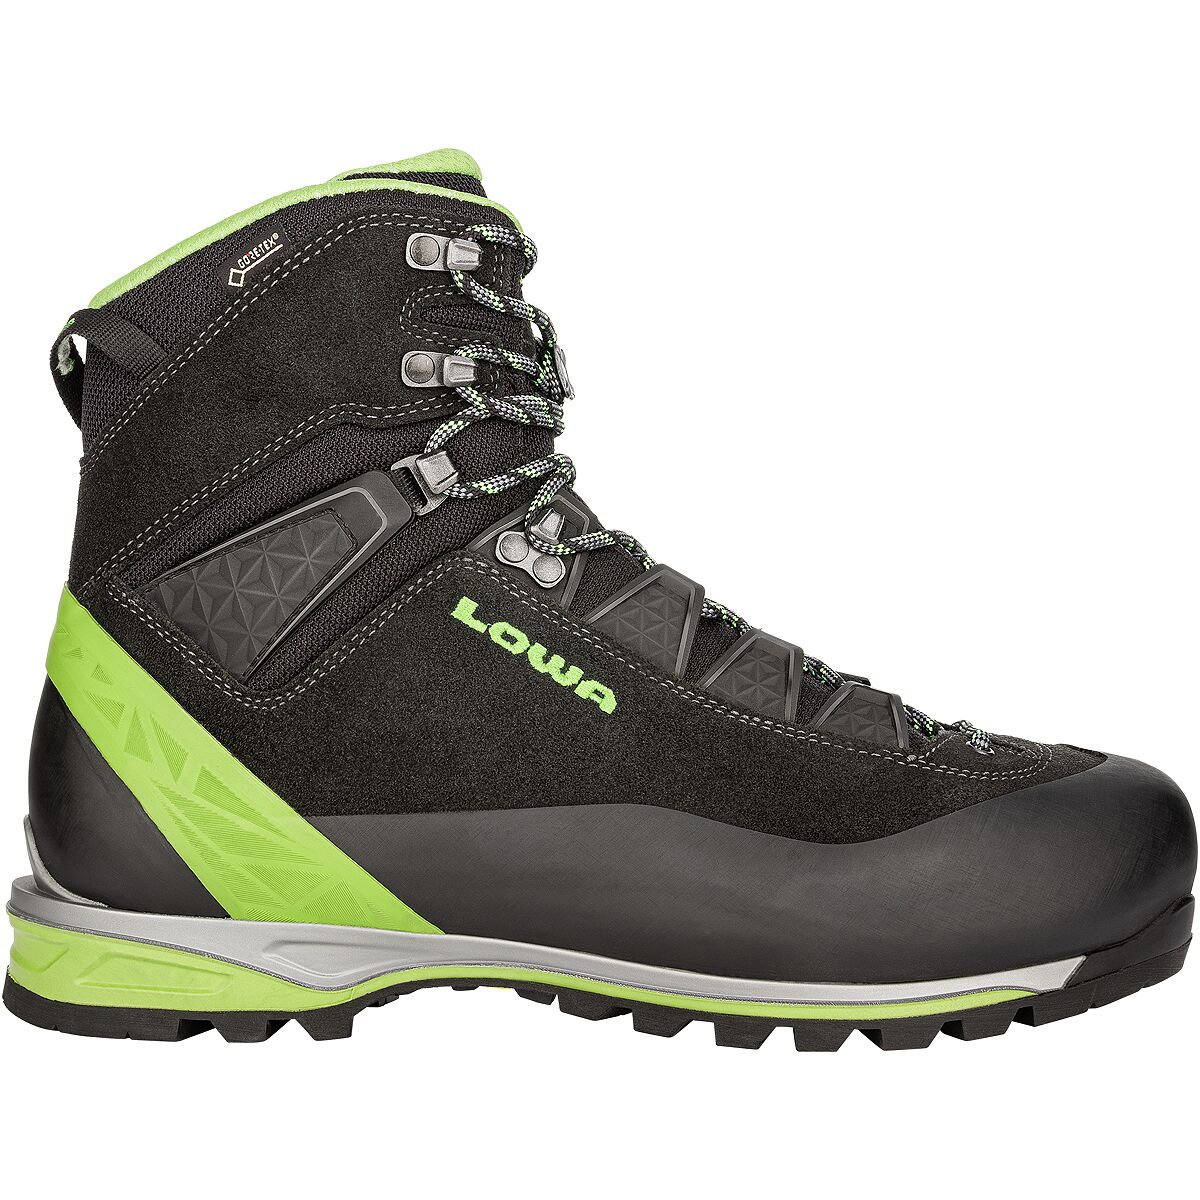 Lowa Alpine Pro LE GTX Mountaineering Boot - Men's